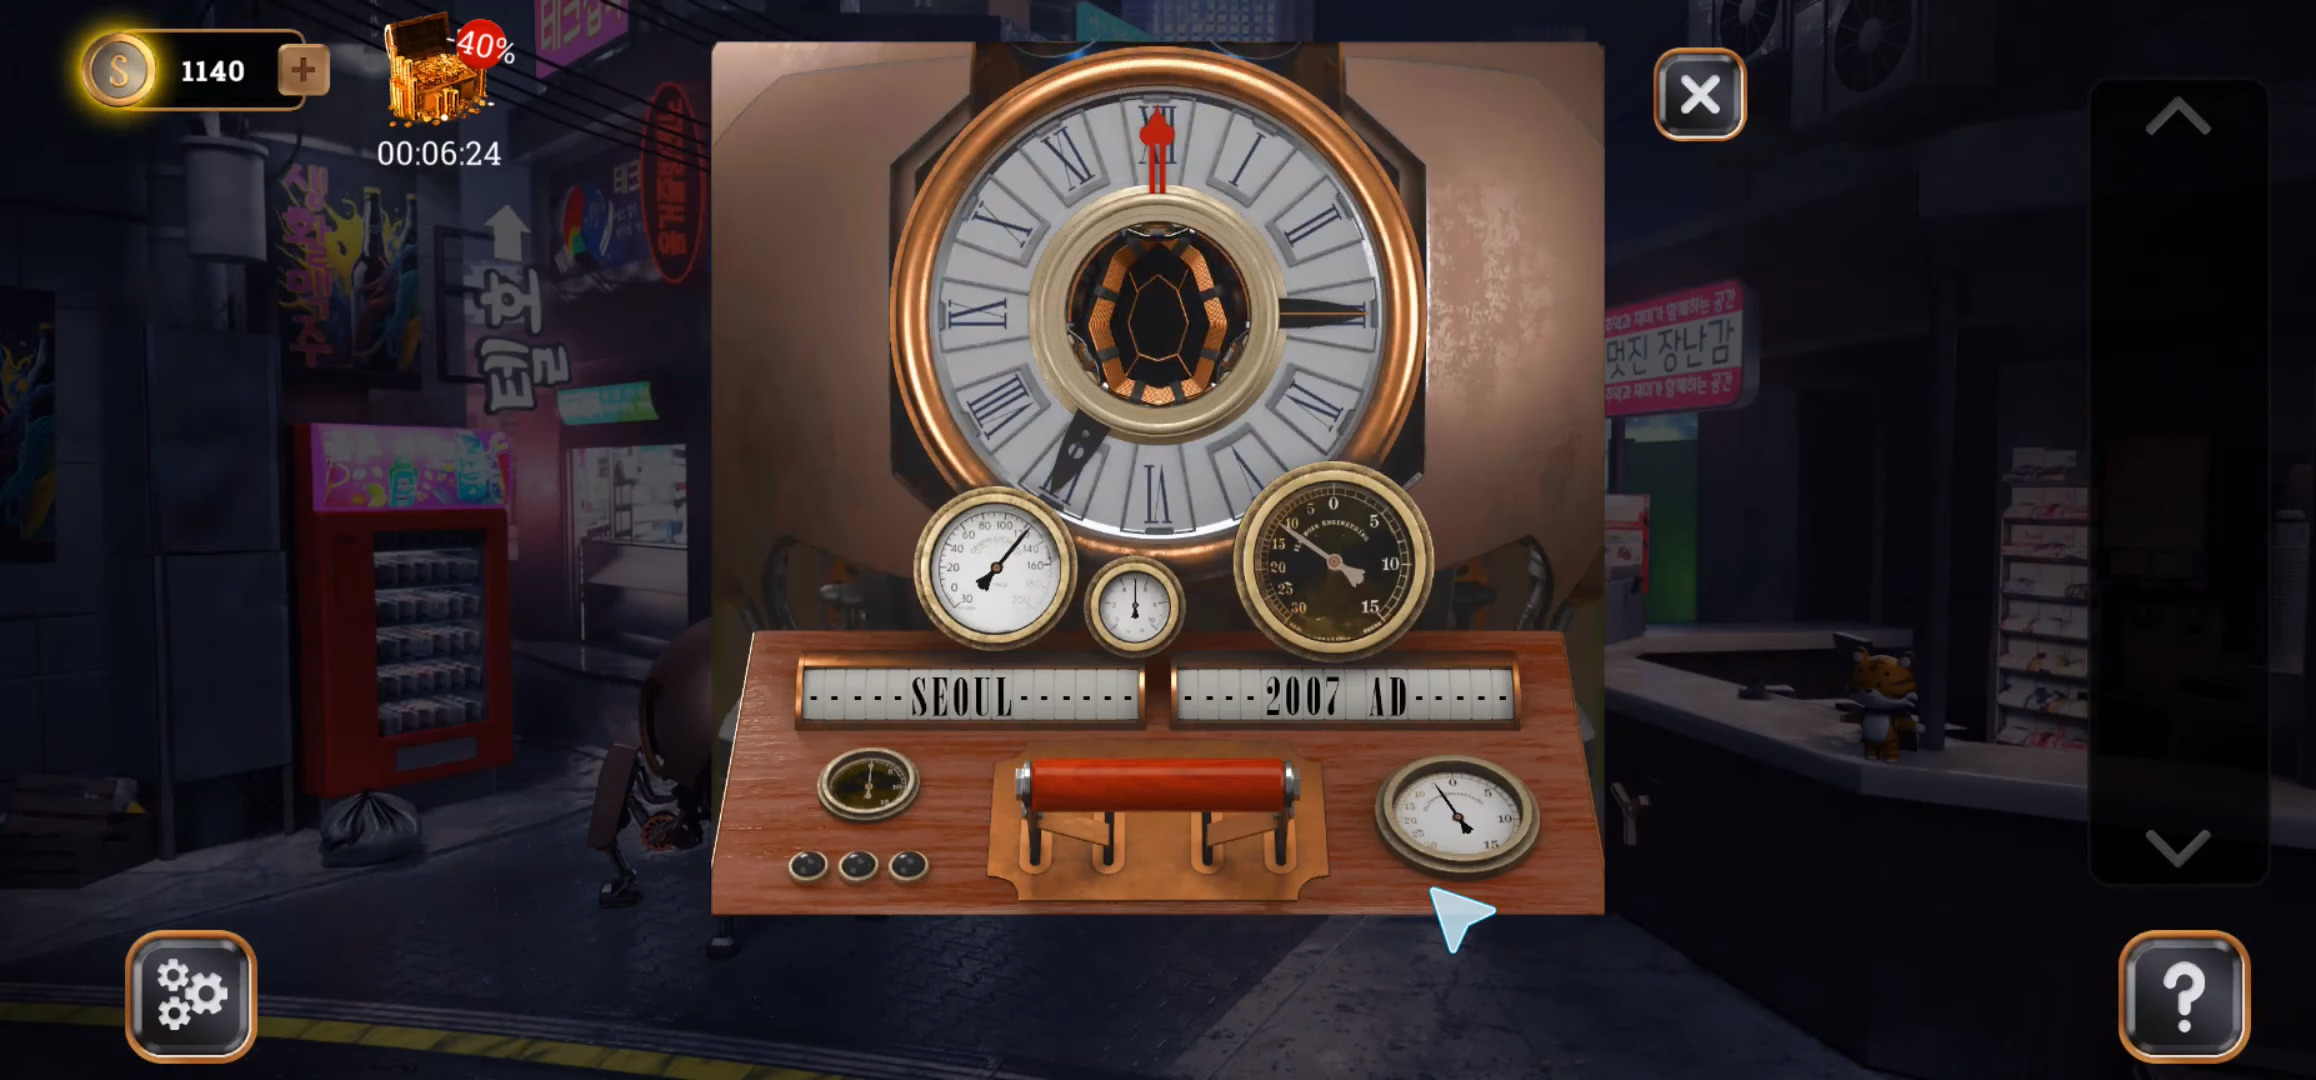 Download Time Travel: Escape Room Game für Android kostenlos.